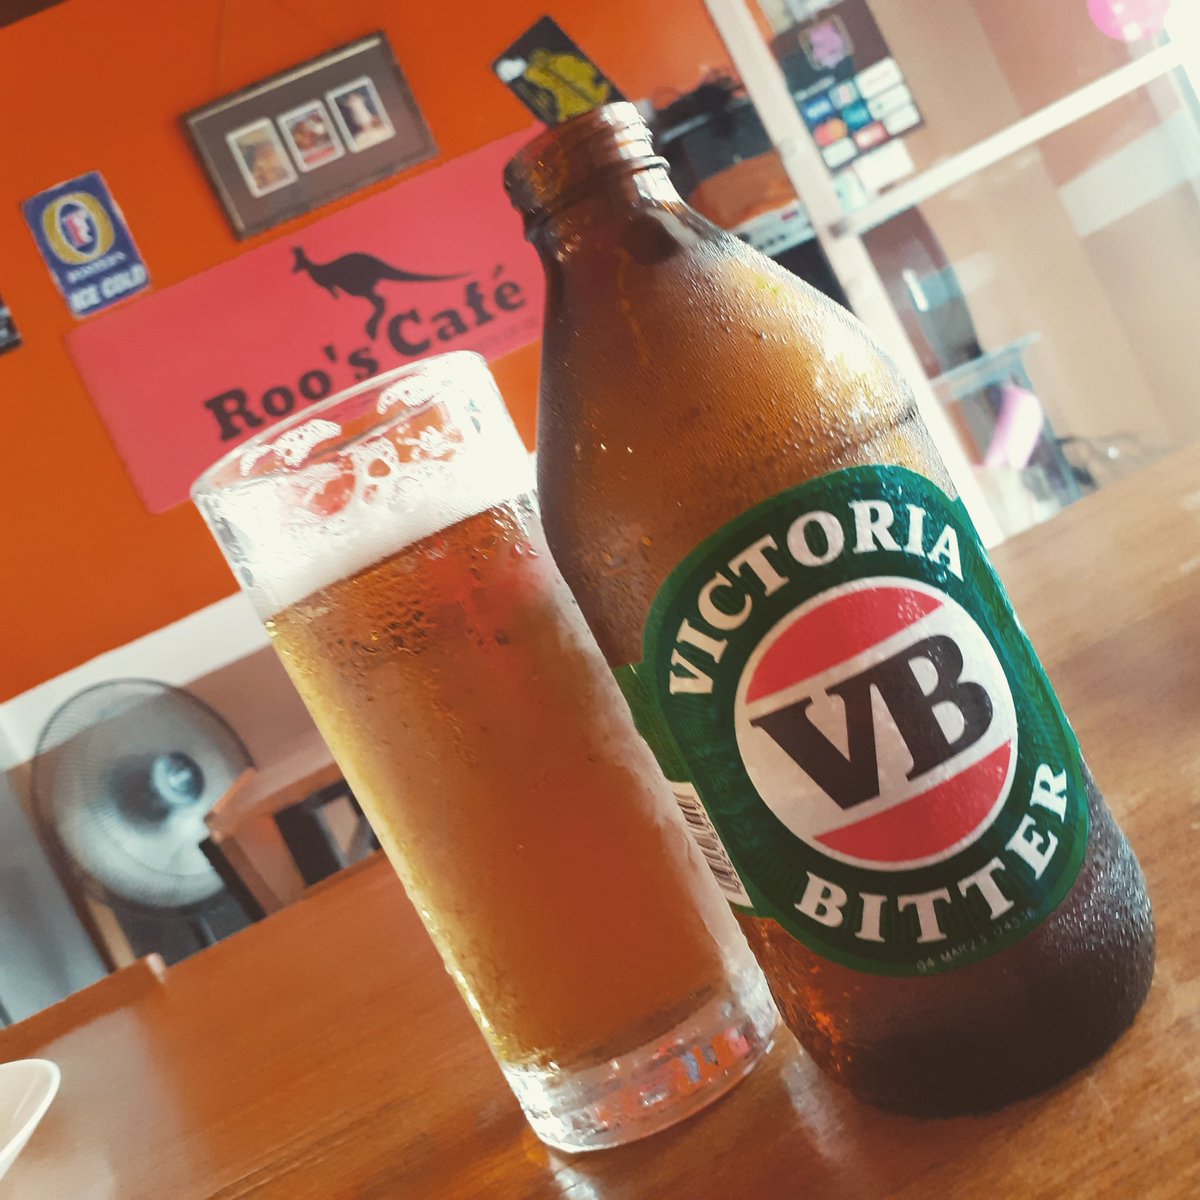 Did taste a taste of Oz at @rooscafe as I got me some stubbies of Victoria Bitter. 

This beer is fairly light at 4.9% abv.

#beverage #drinks  #pourthatbeer #refreshing #beerculture #beerlover #beer #beerstagram #beer🍺 #beerphotography #ozbeer #ozbeerhouse #australianbeer